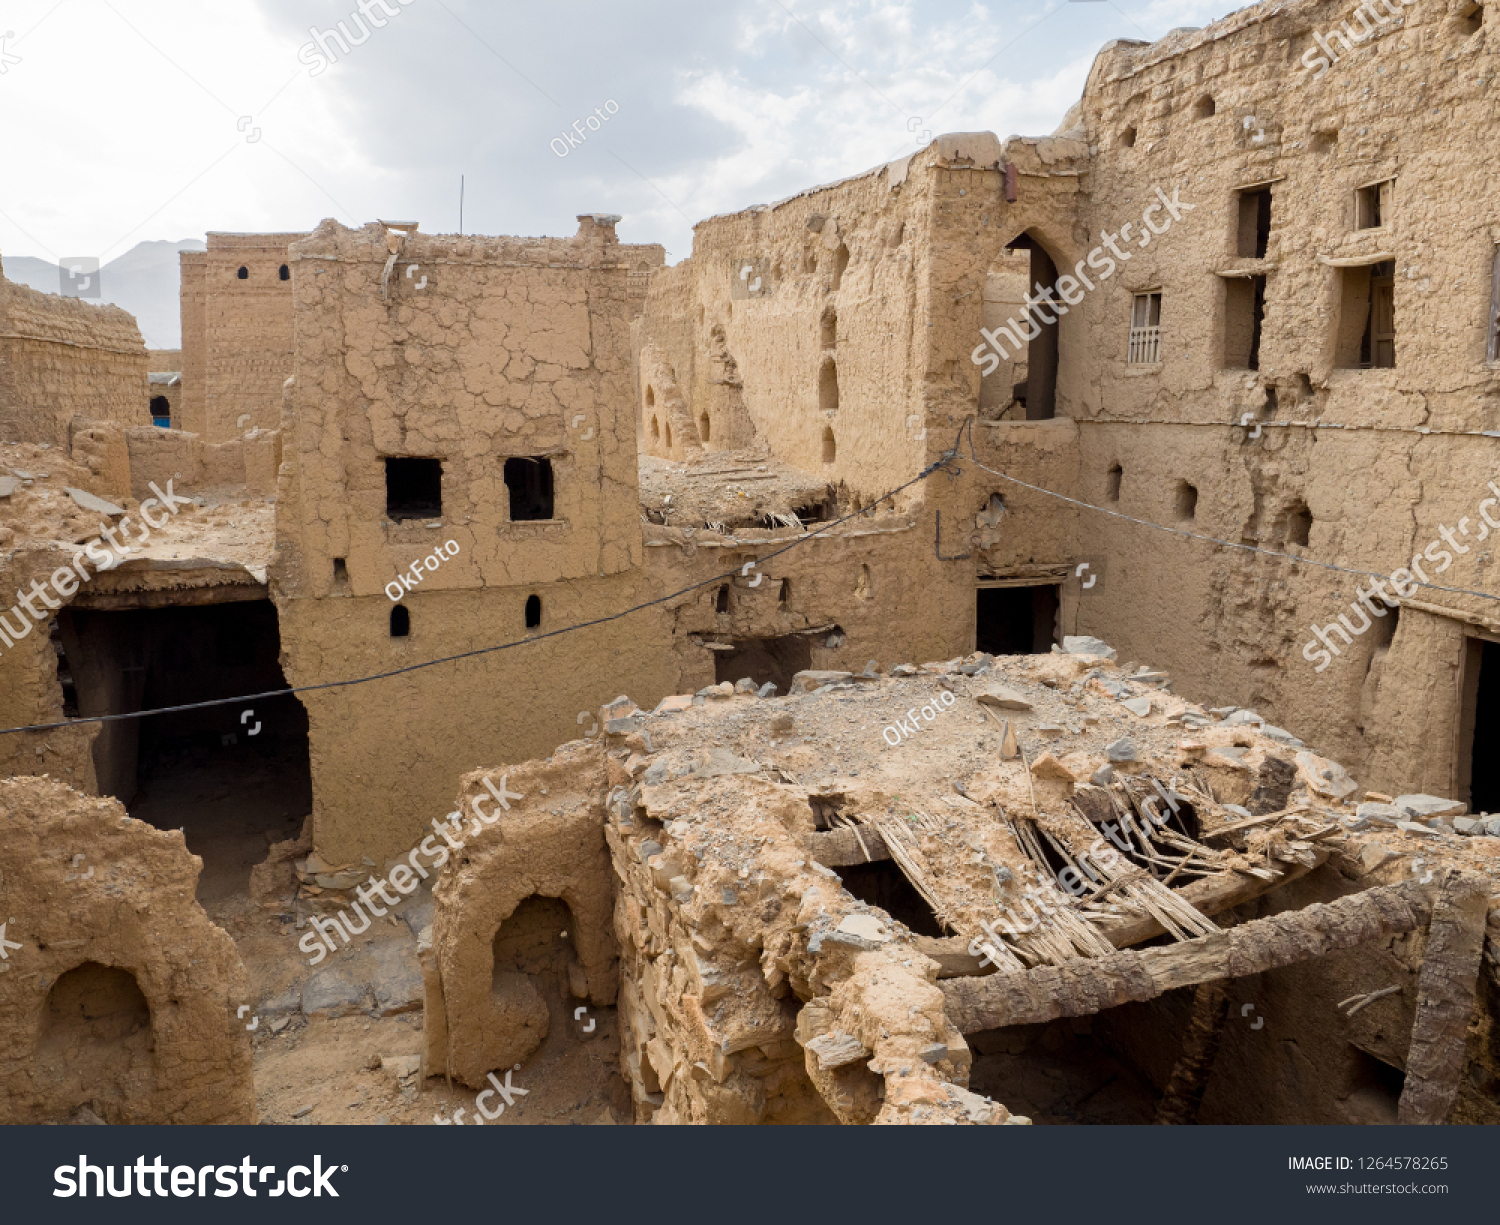 Panoramic view of several ancient mud brick houses ruins in Al Hamra, Oman #1264578265